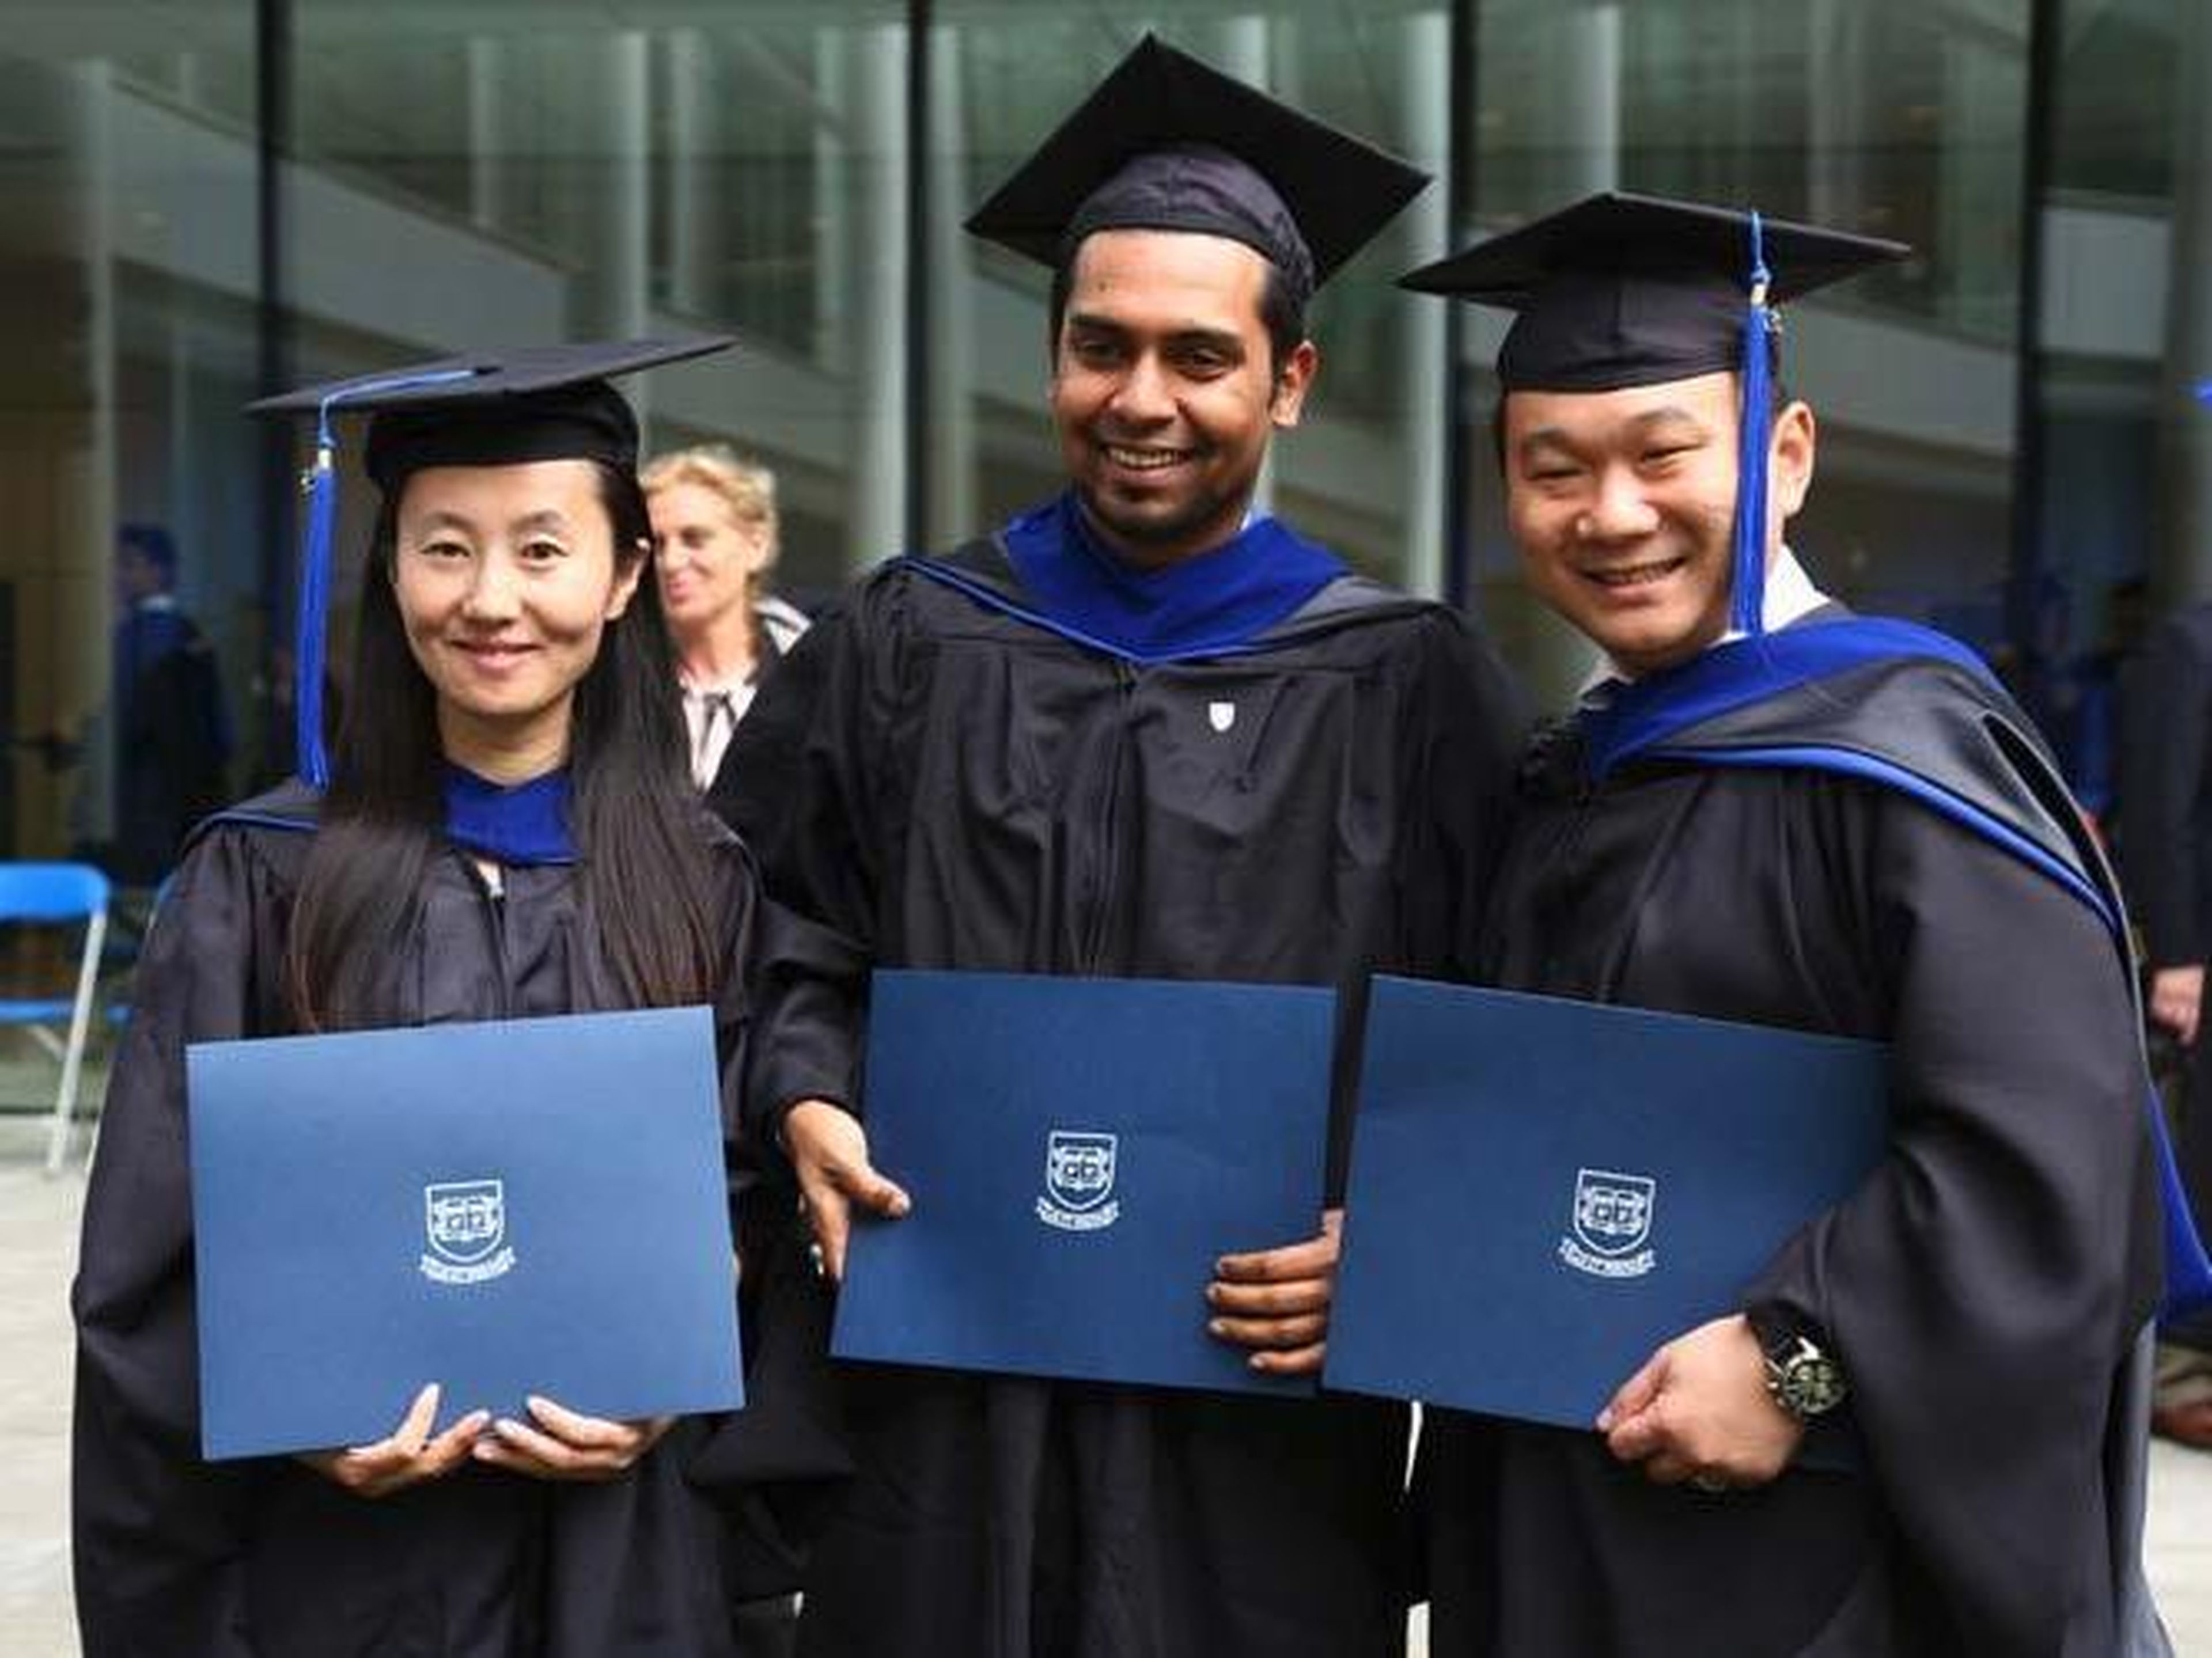 18. Yale grads earn an average post-graduation salary of $110K to $120K.